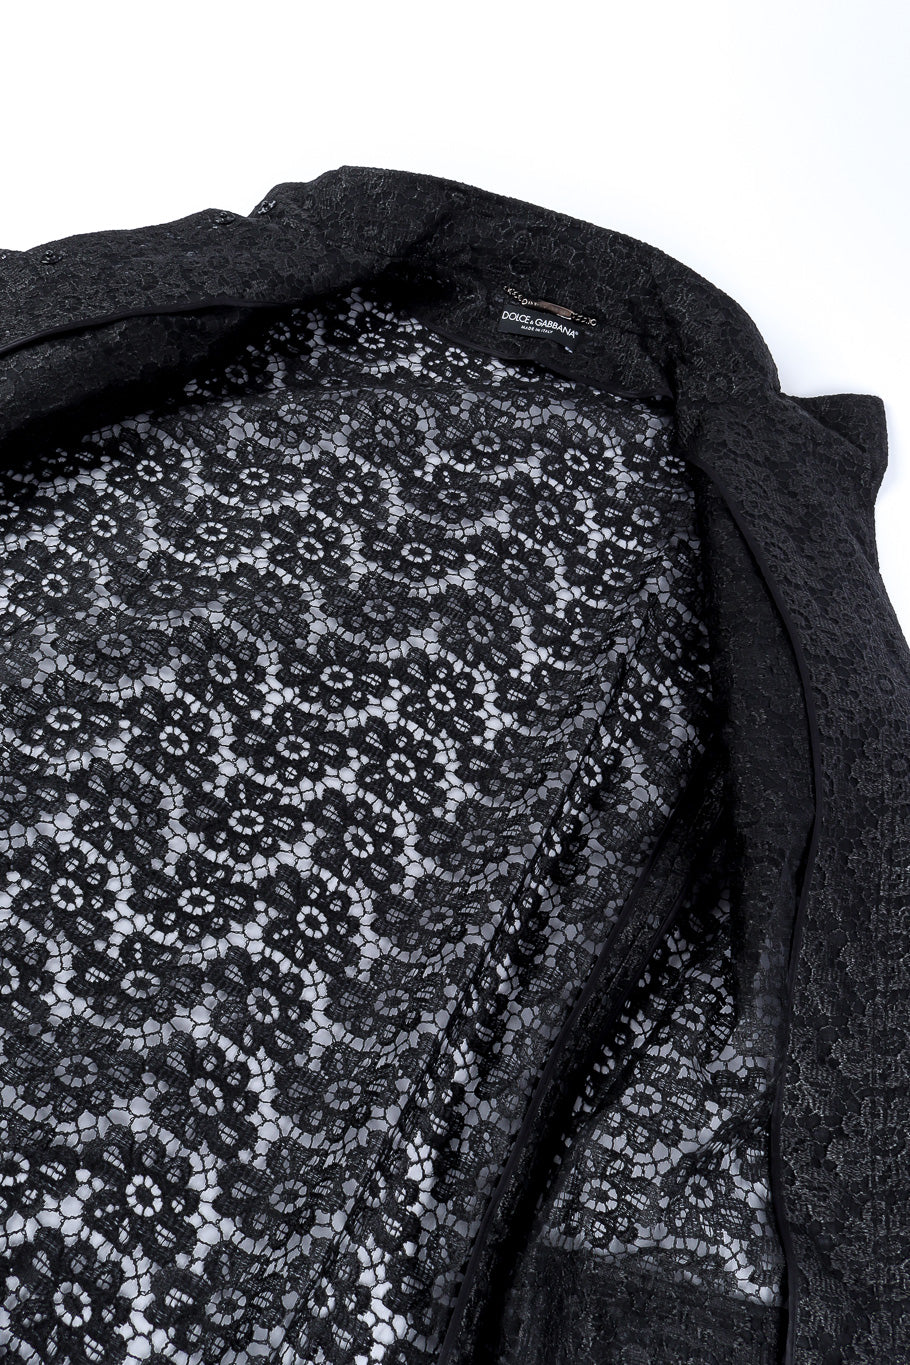 Dolce & Gabbana lace pattern coat fabric detail @recessla